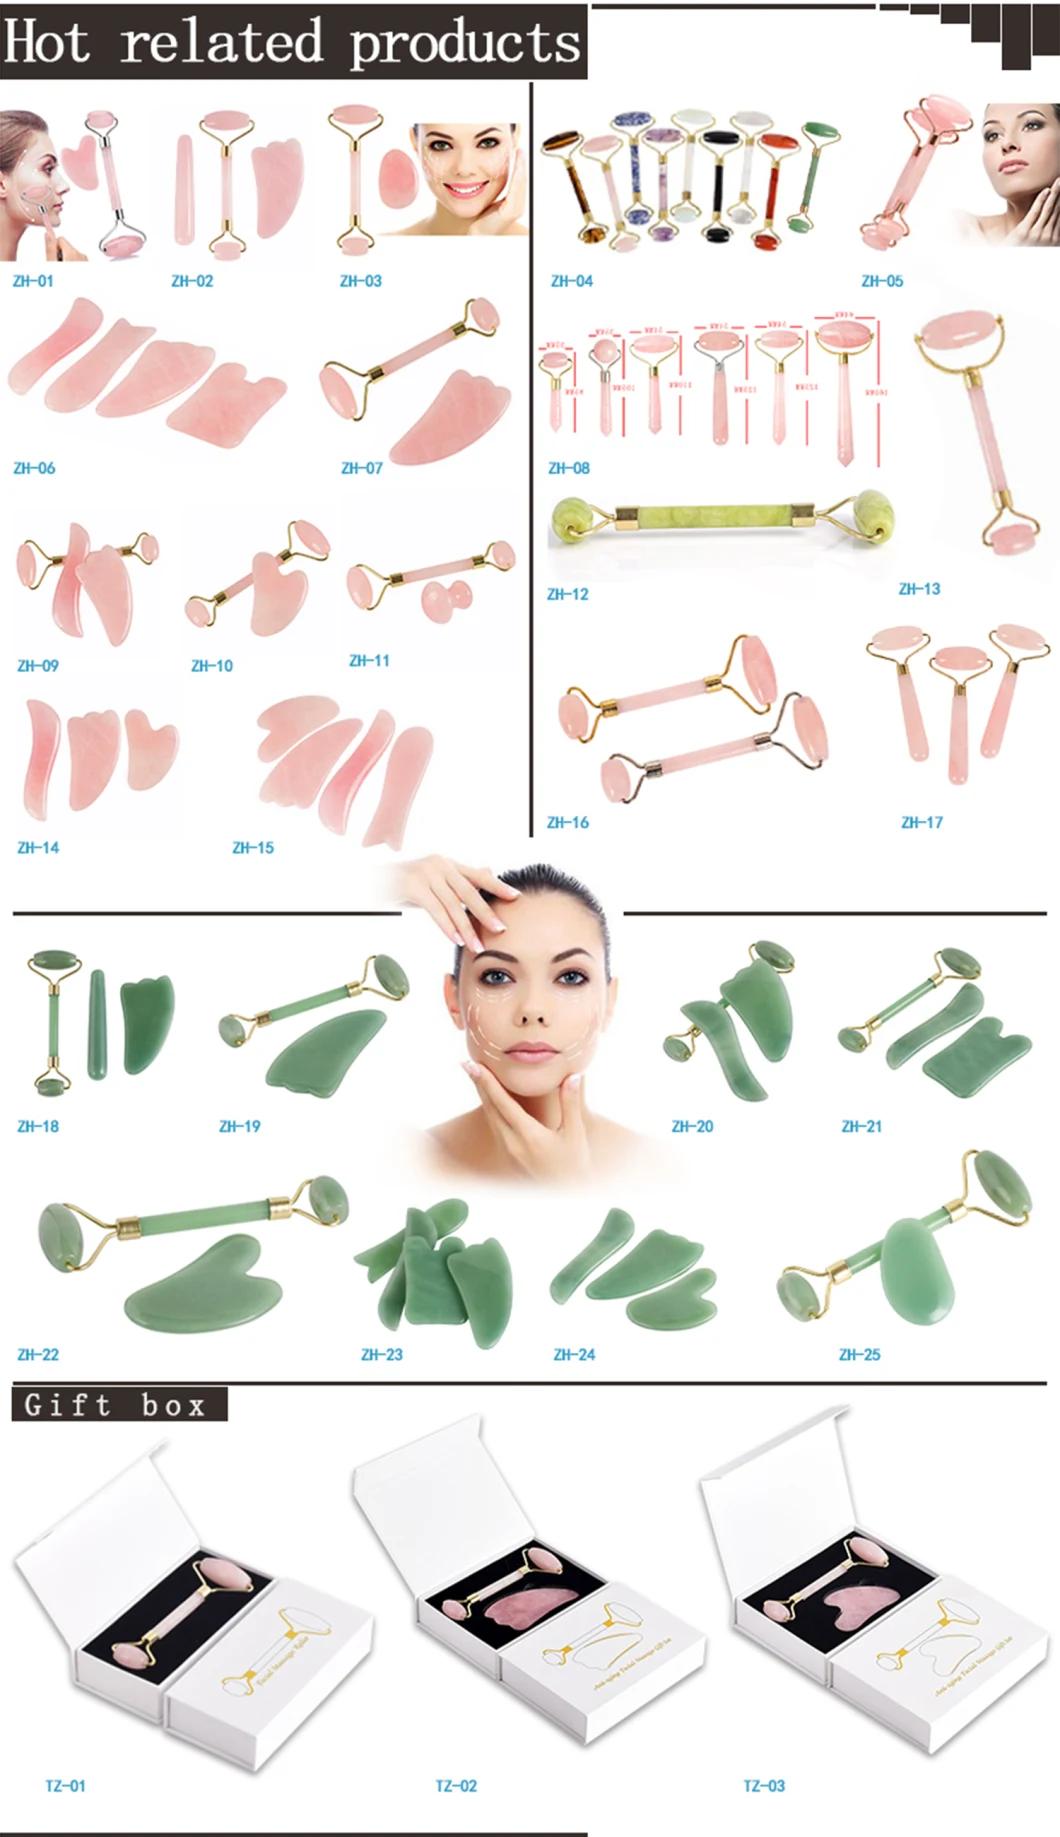 Best Price Hanhe Handheld Rose Quartz Jade Roller Gua Sha Beauty Facial Massage Rose Jade Roller for Face with Box